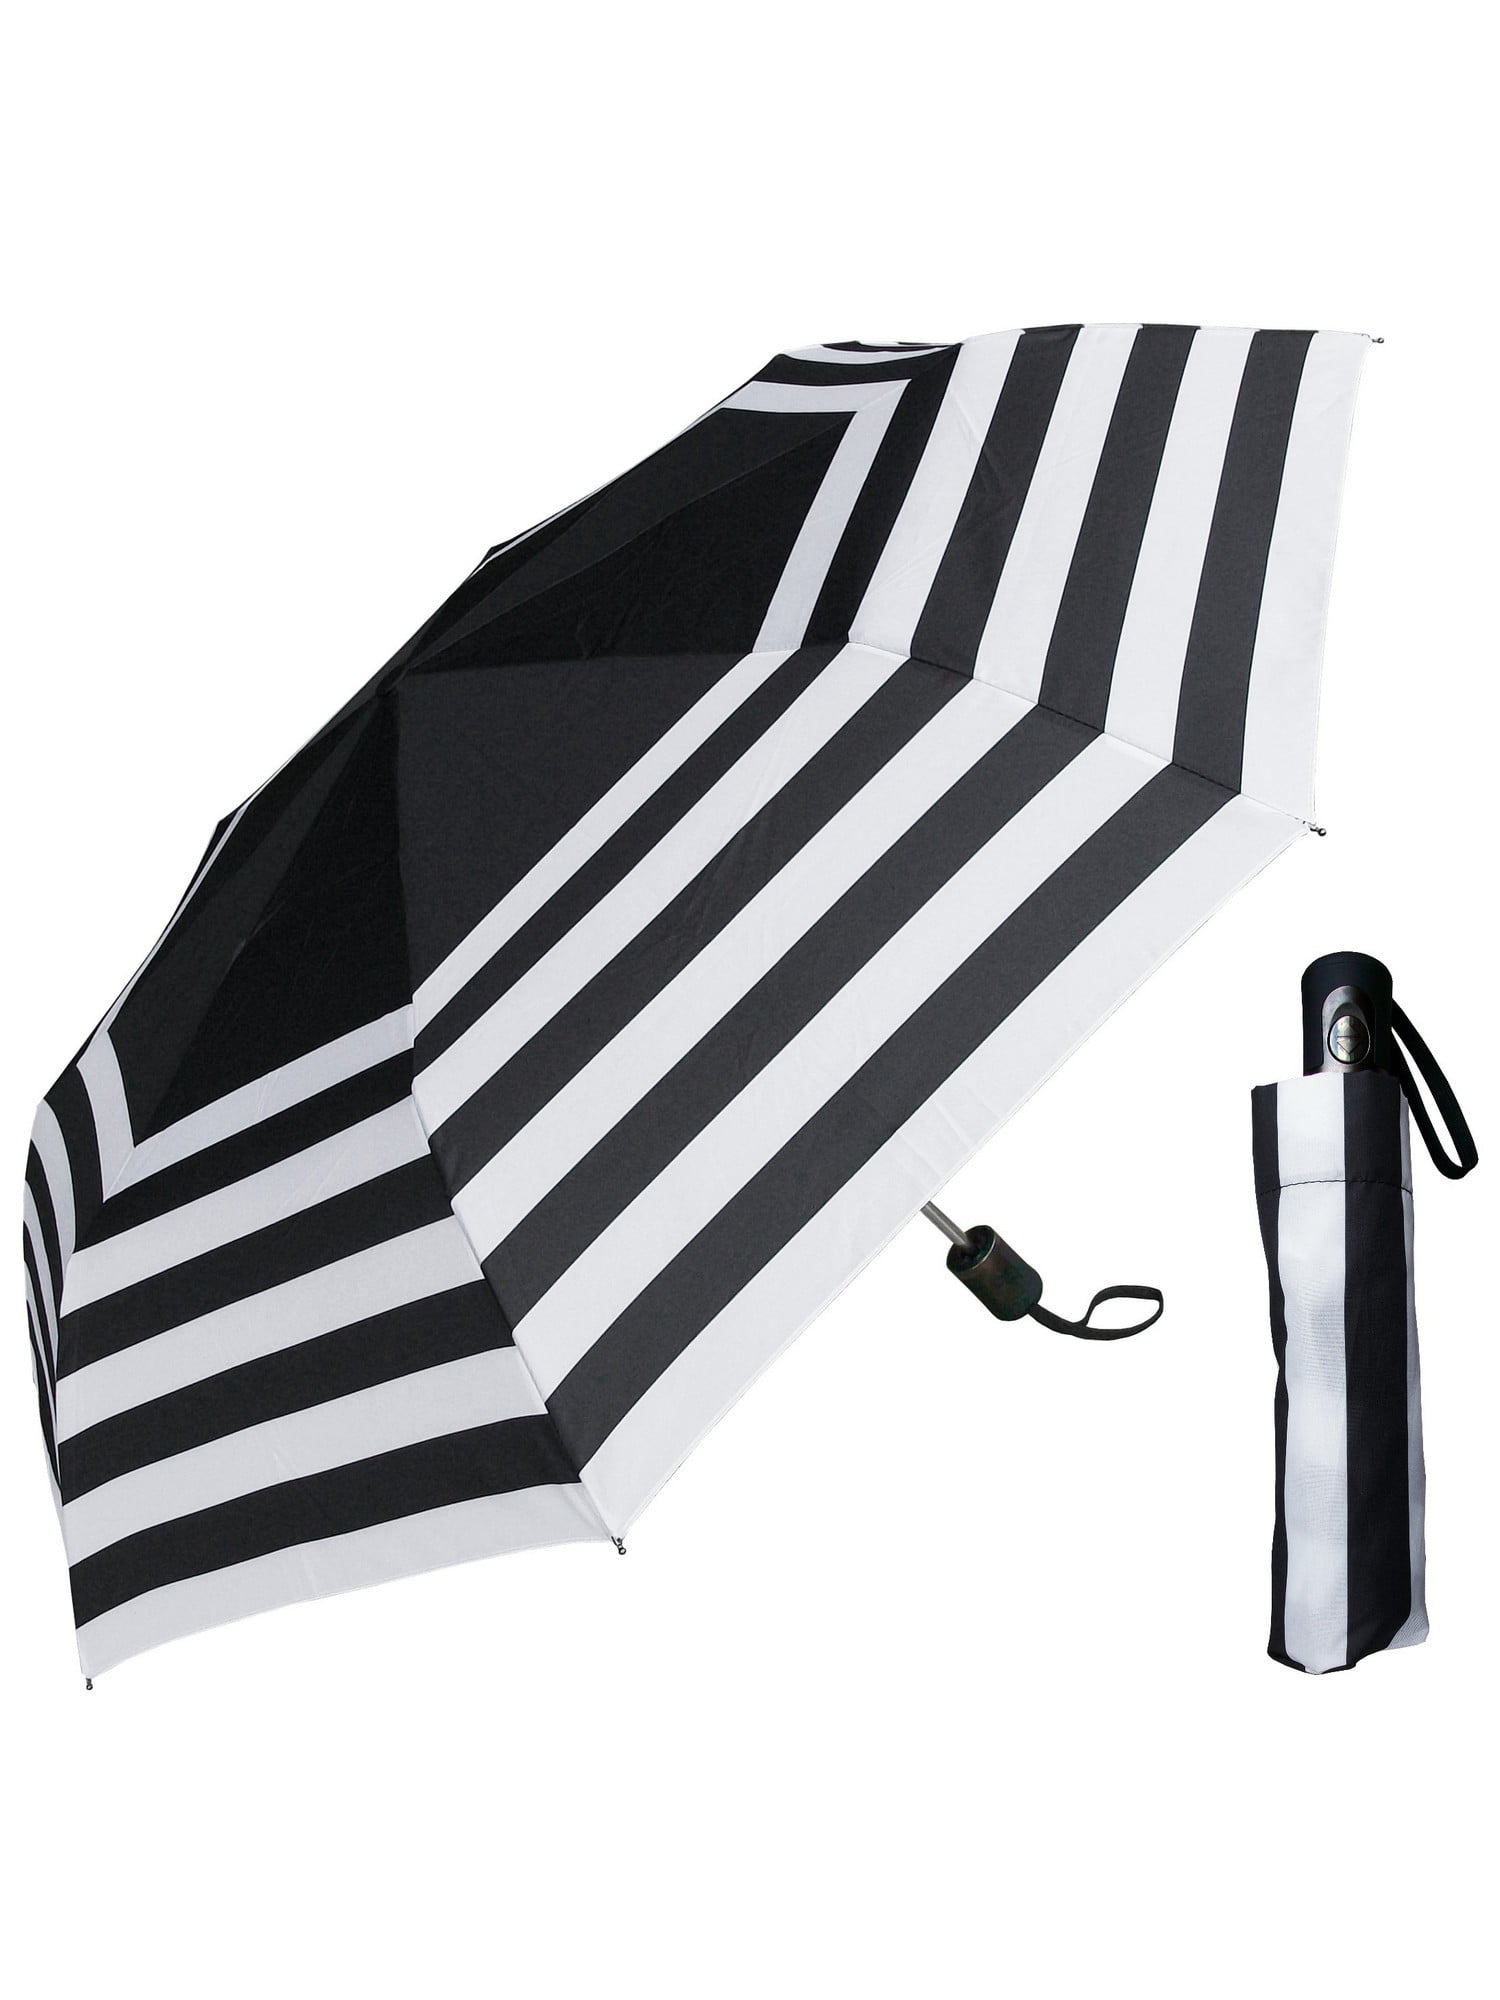 RainStoppers Umbrella Auto Open/Close Changing Color Music Print 44 Black/White 